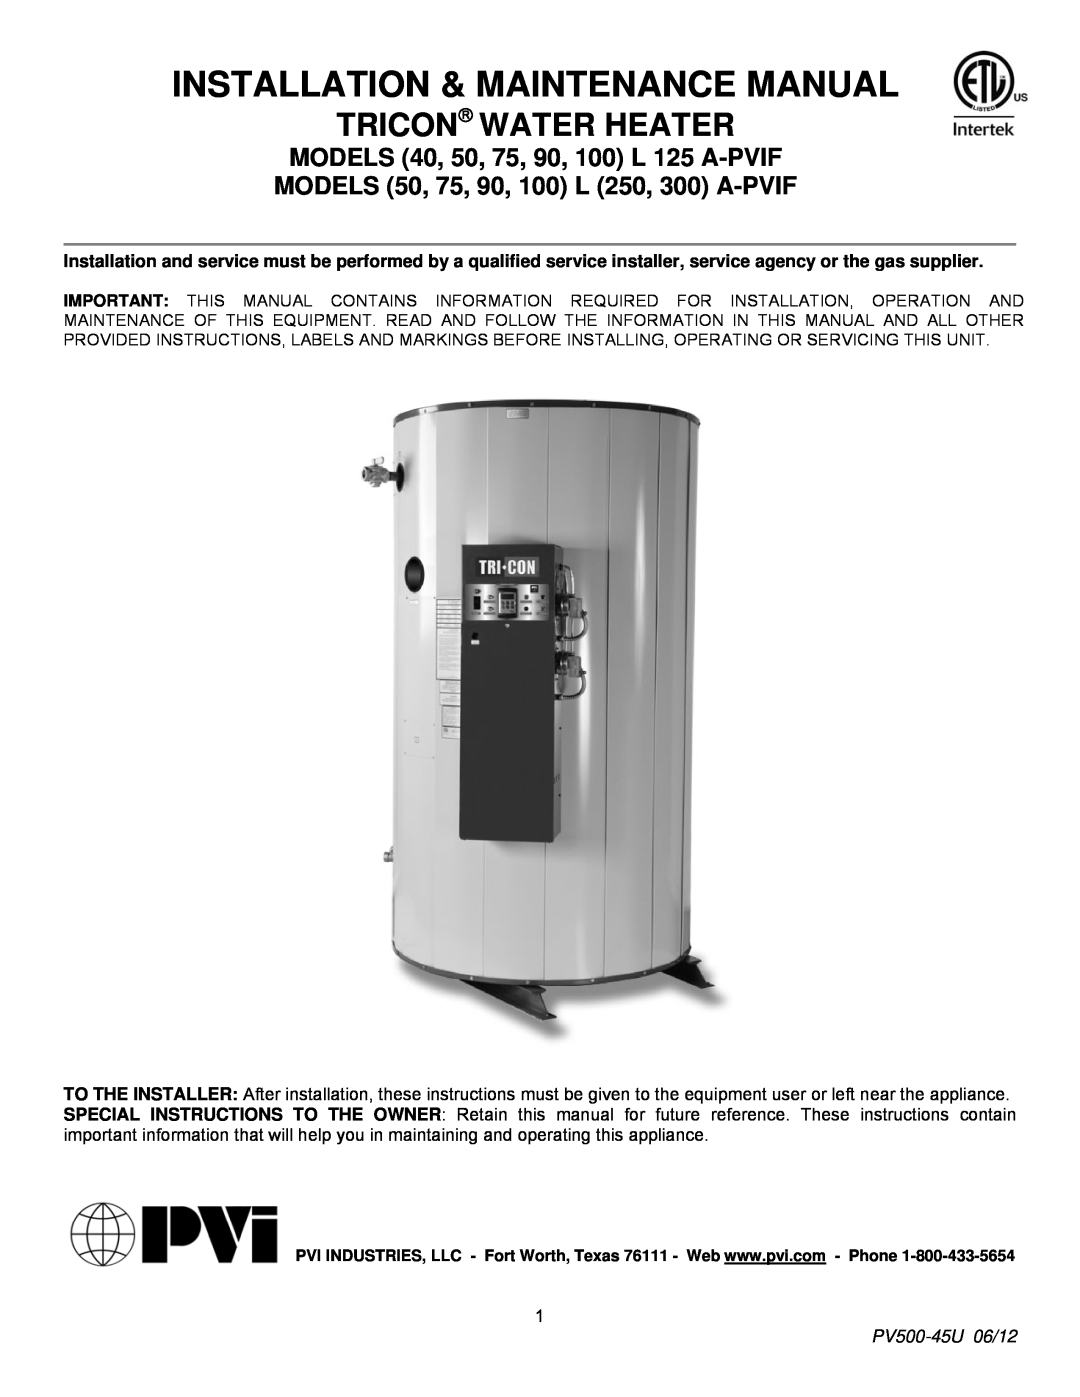 PVI Industries manual Installation & Maintenance Manual, Tricon Water Heater, PV500-45U06/12 